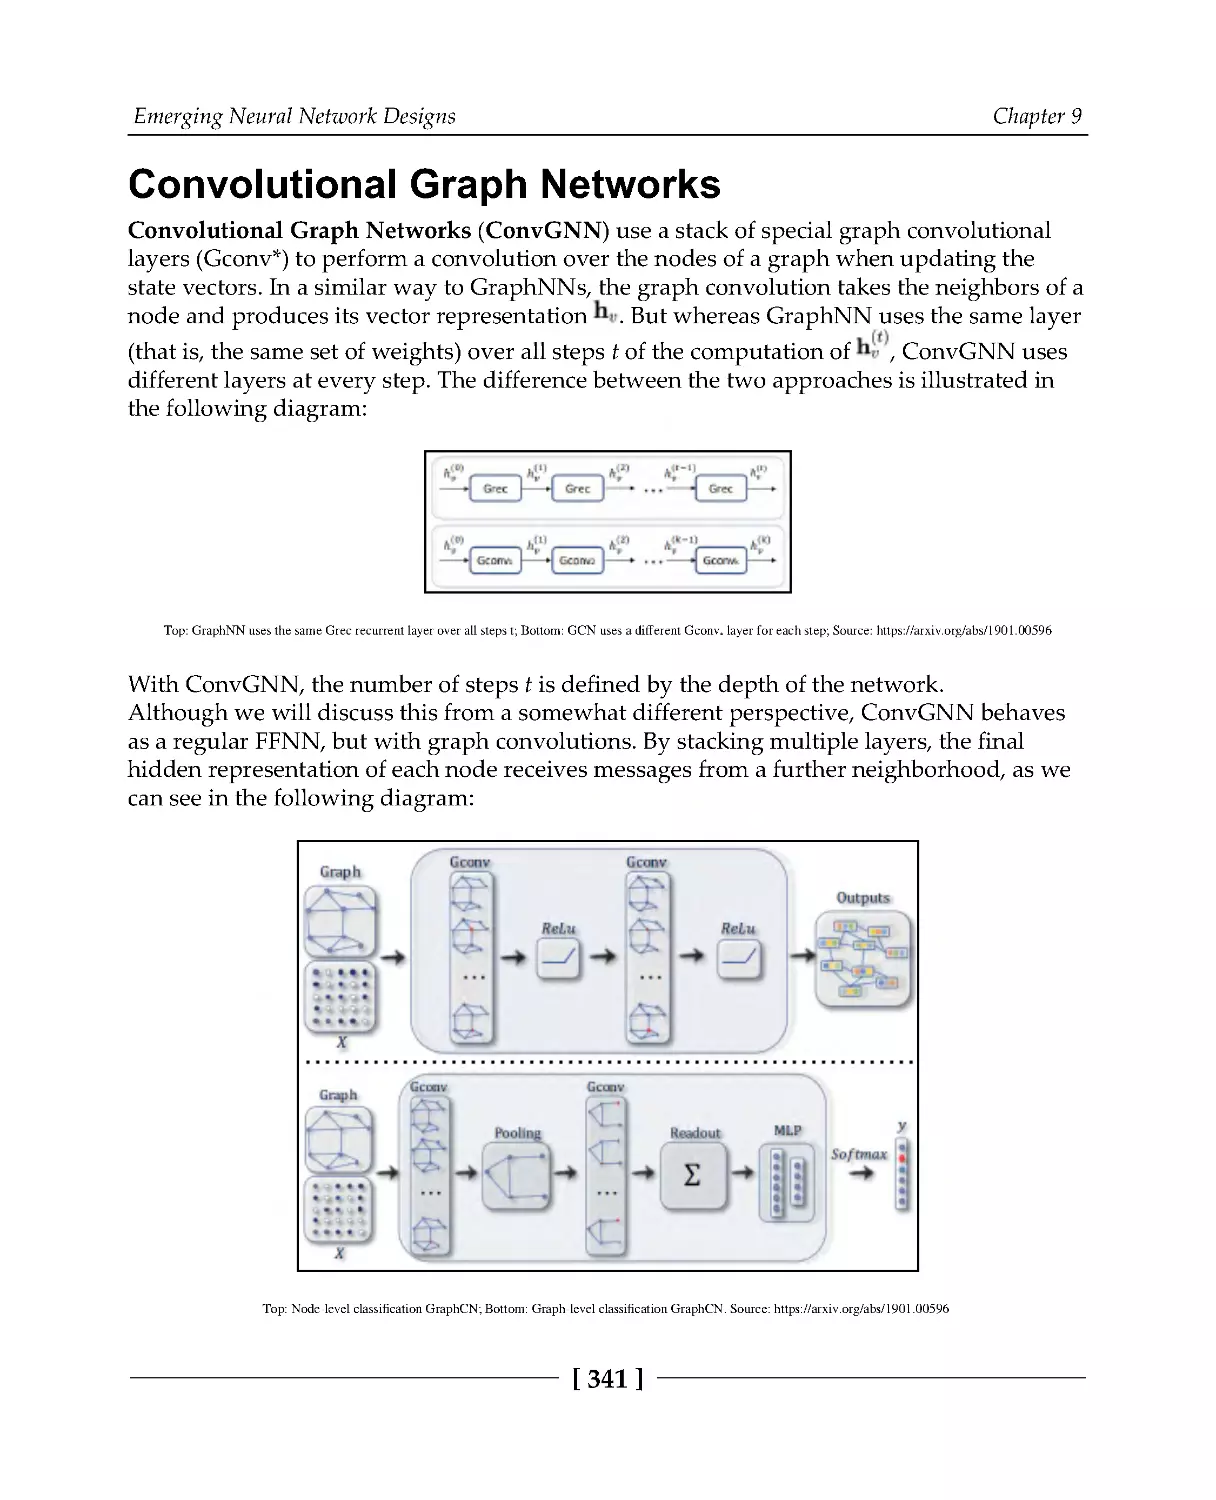 Convolutional Graph Networks